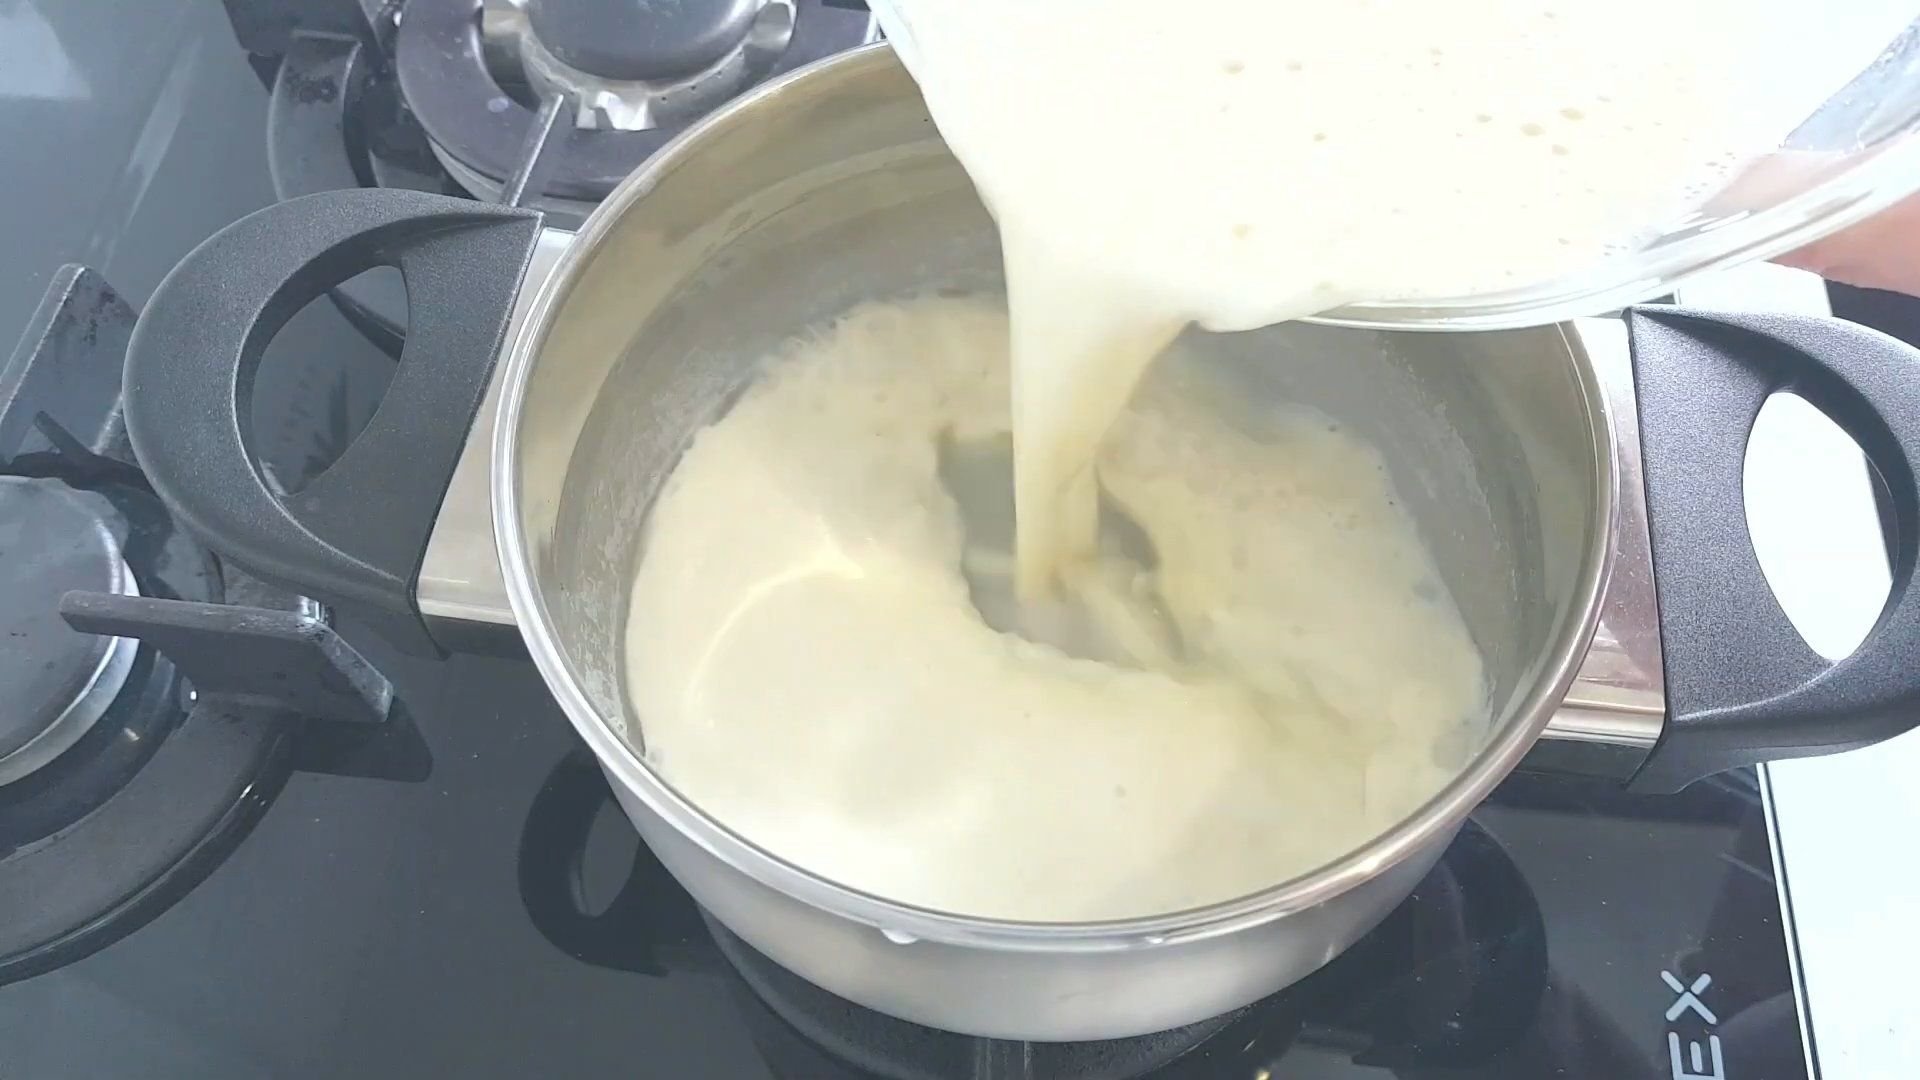 Крем пломбир со сливками для торта рецепт с фото пошагово в домашних условиях